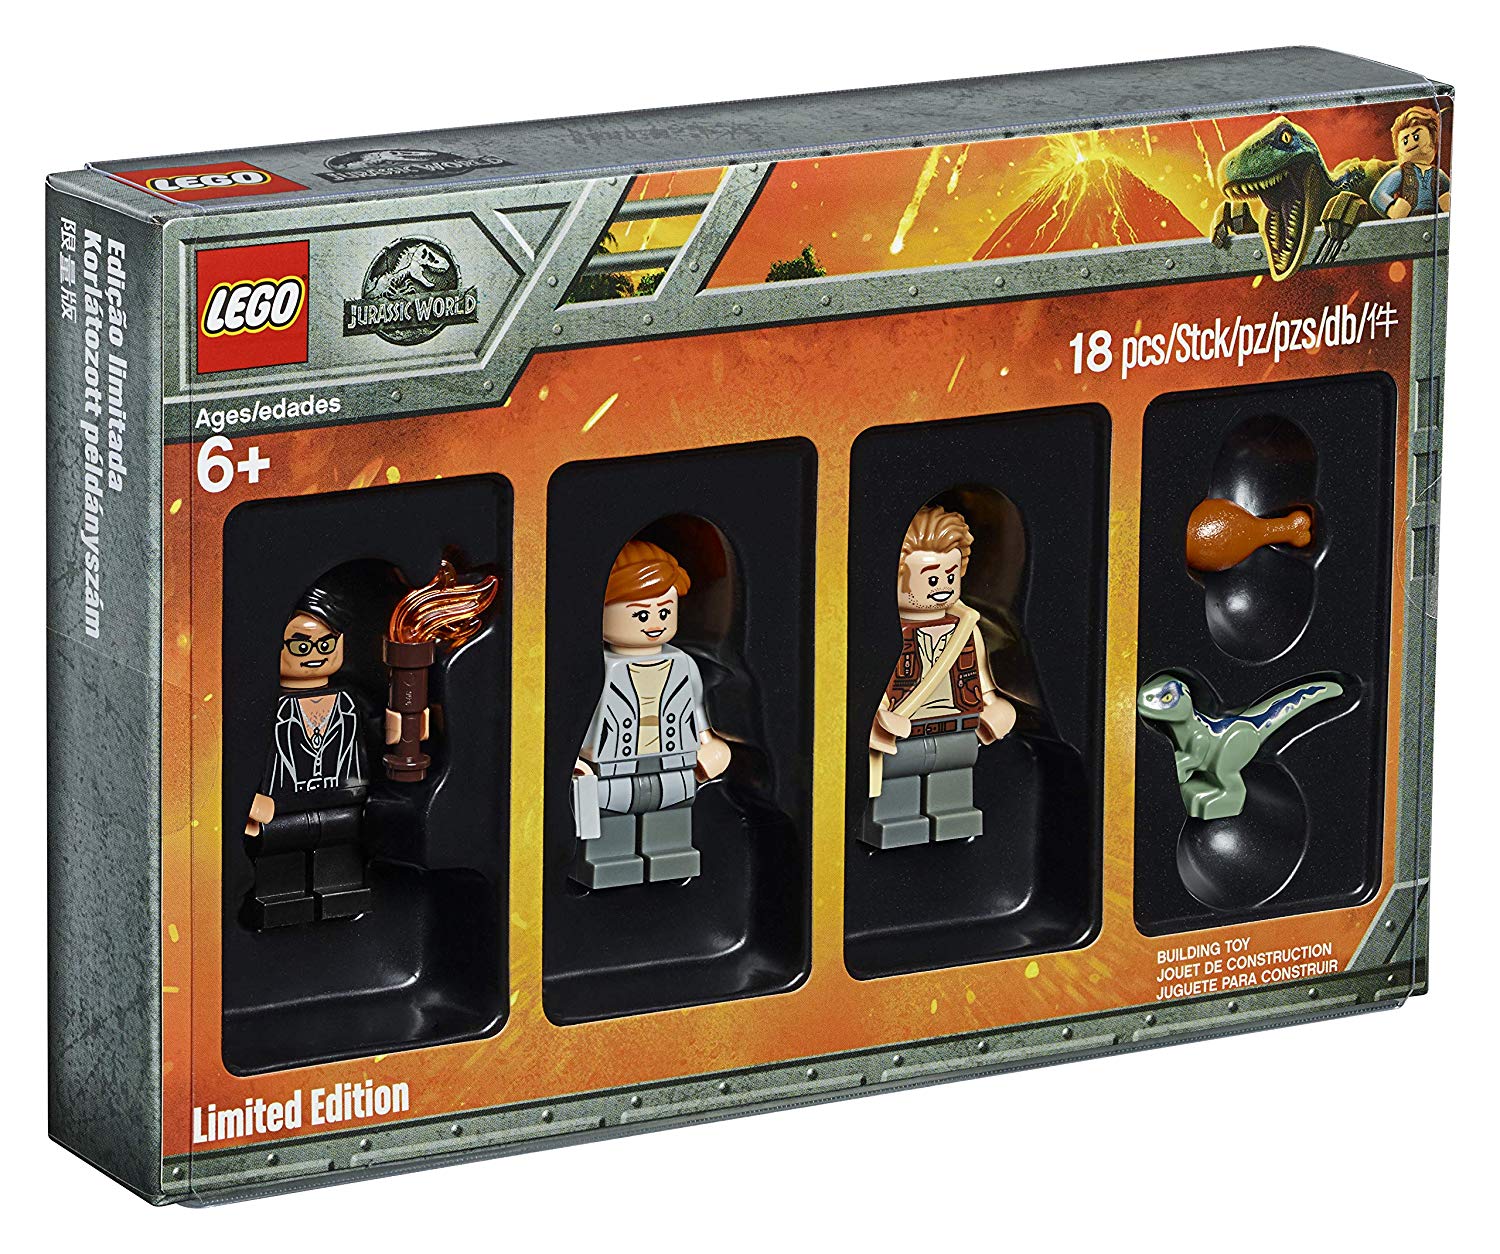 Lego Jurassic World 5005255 Mini Figures Set